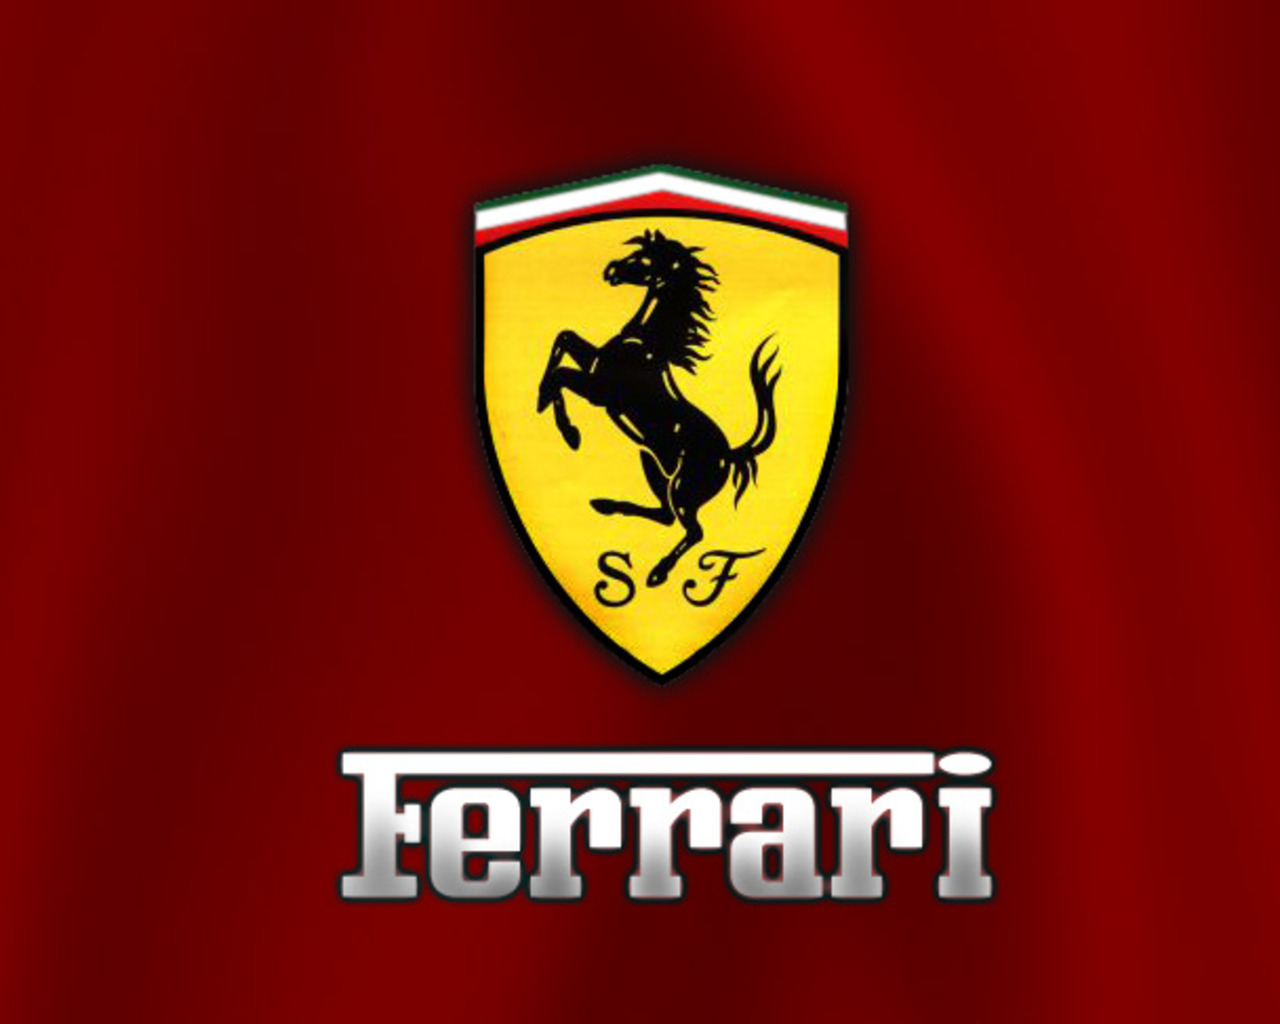 Ferrari Brand Logo Wallpaper Bwalles